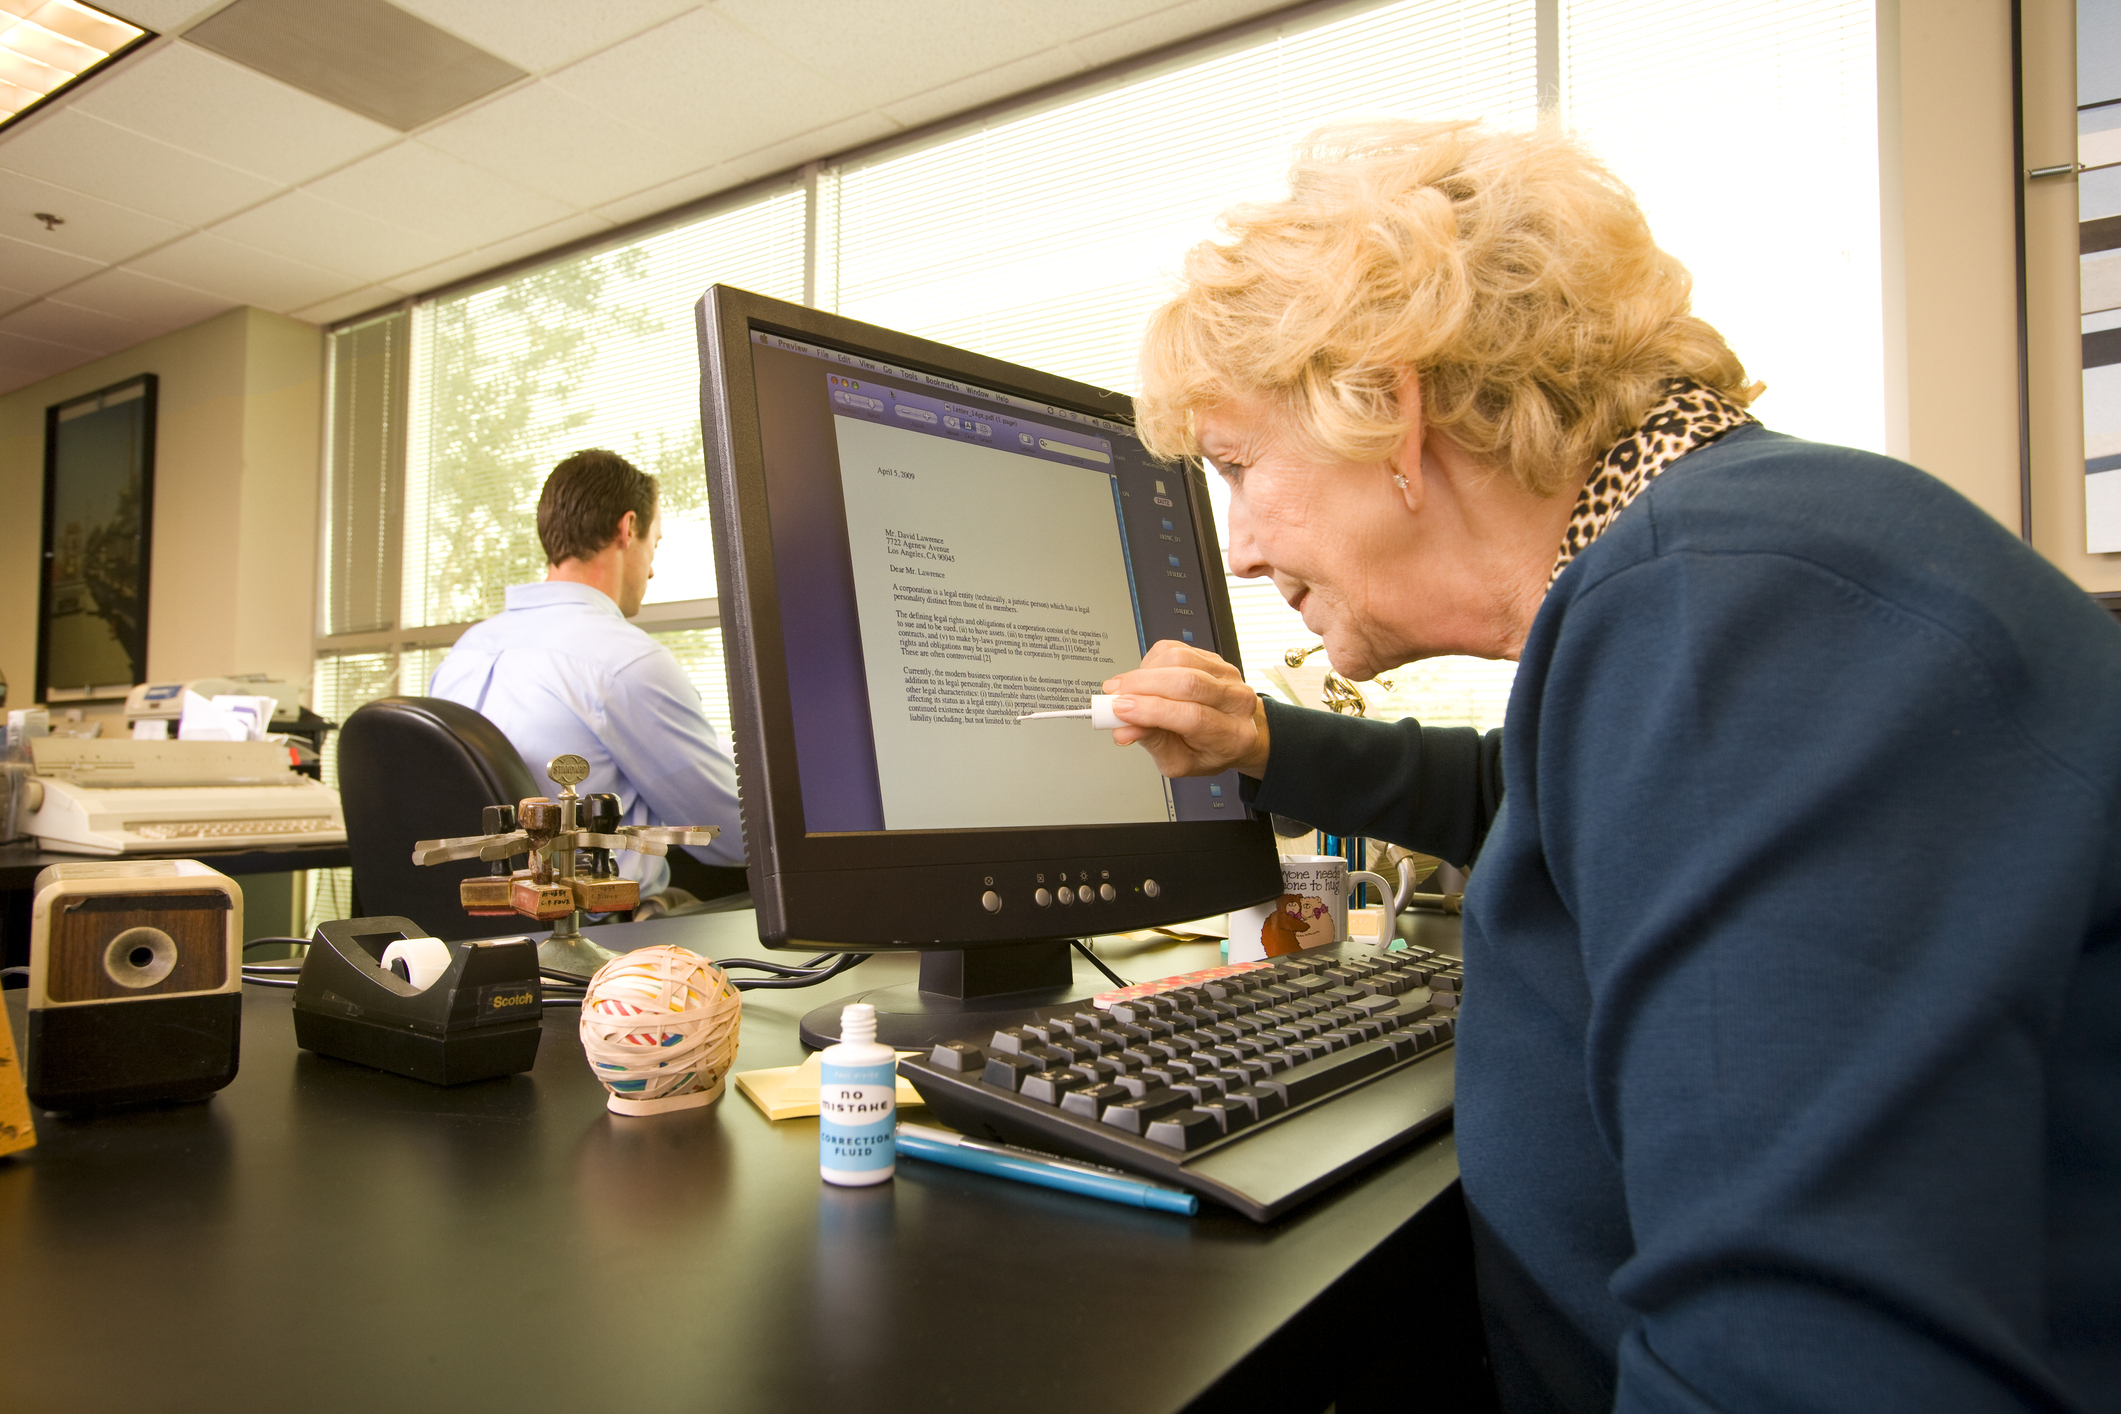 Woman using liquid correction fluid on computer